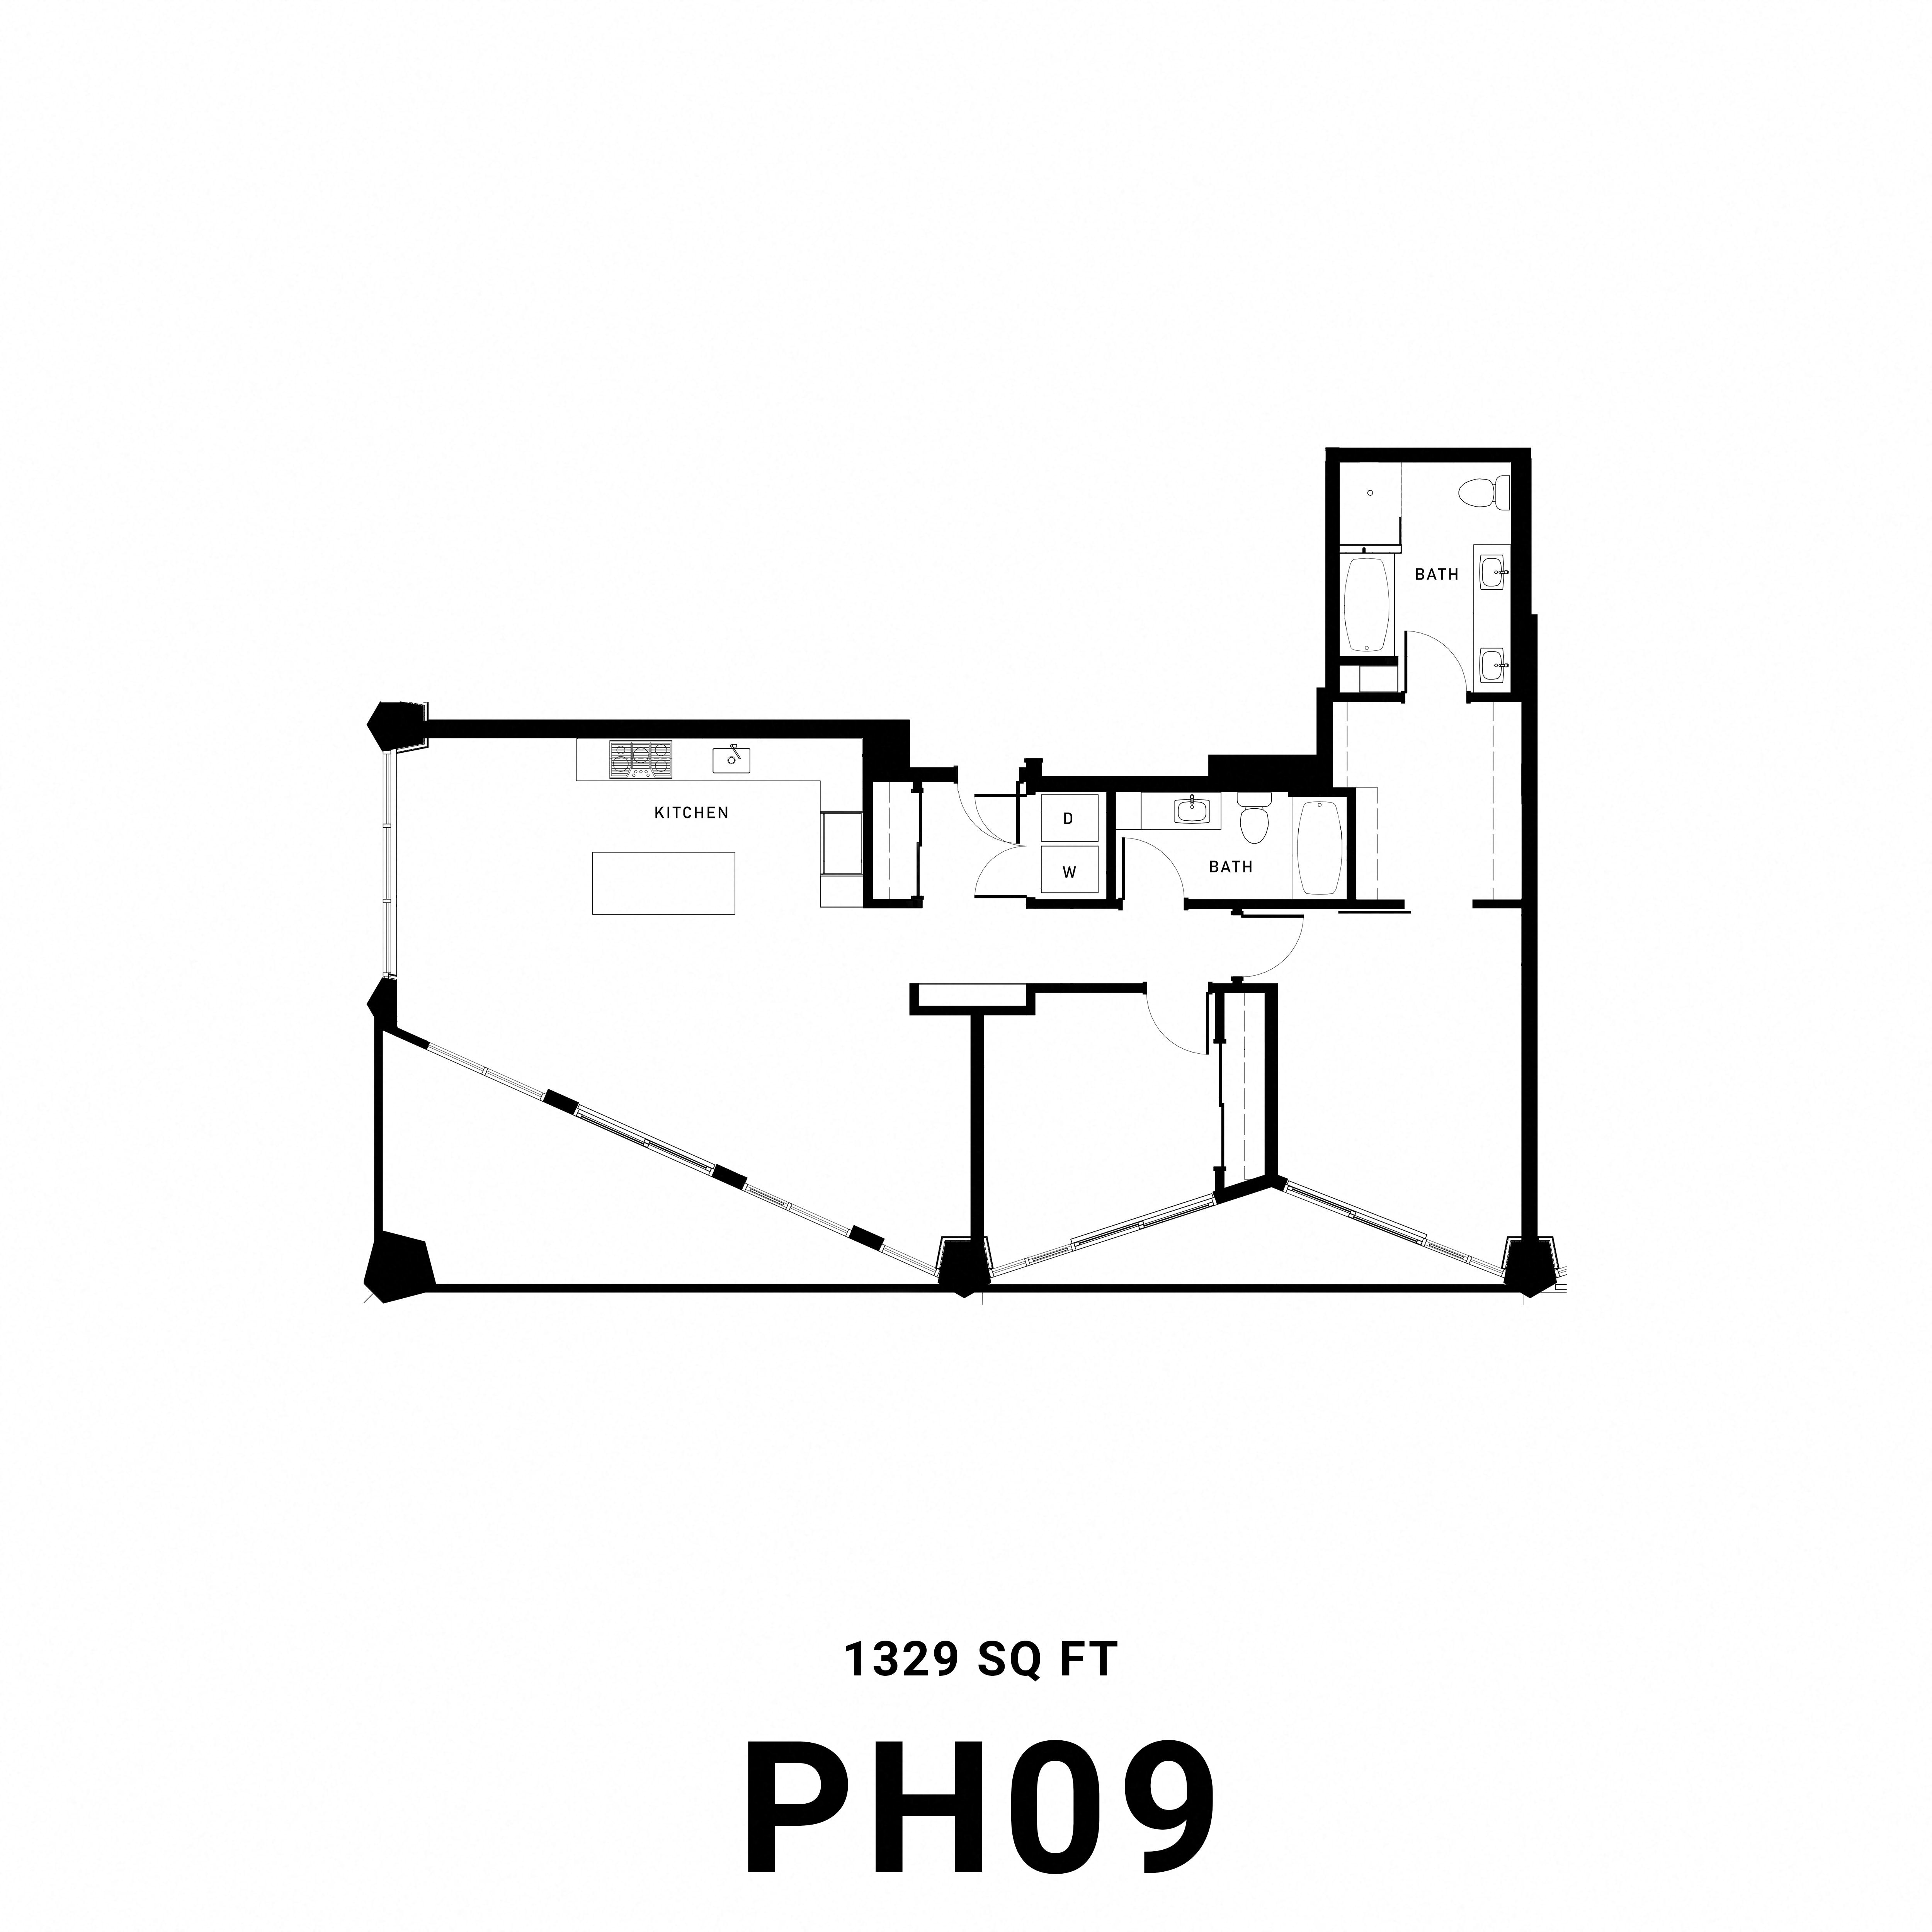 Floorplan PH09